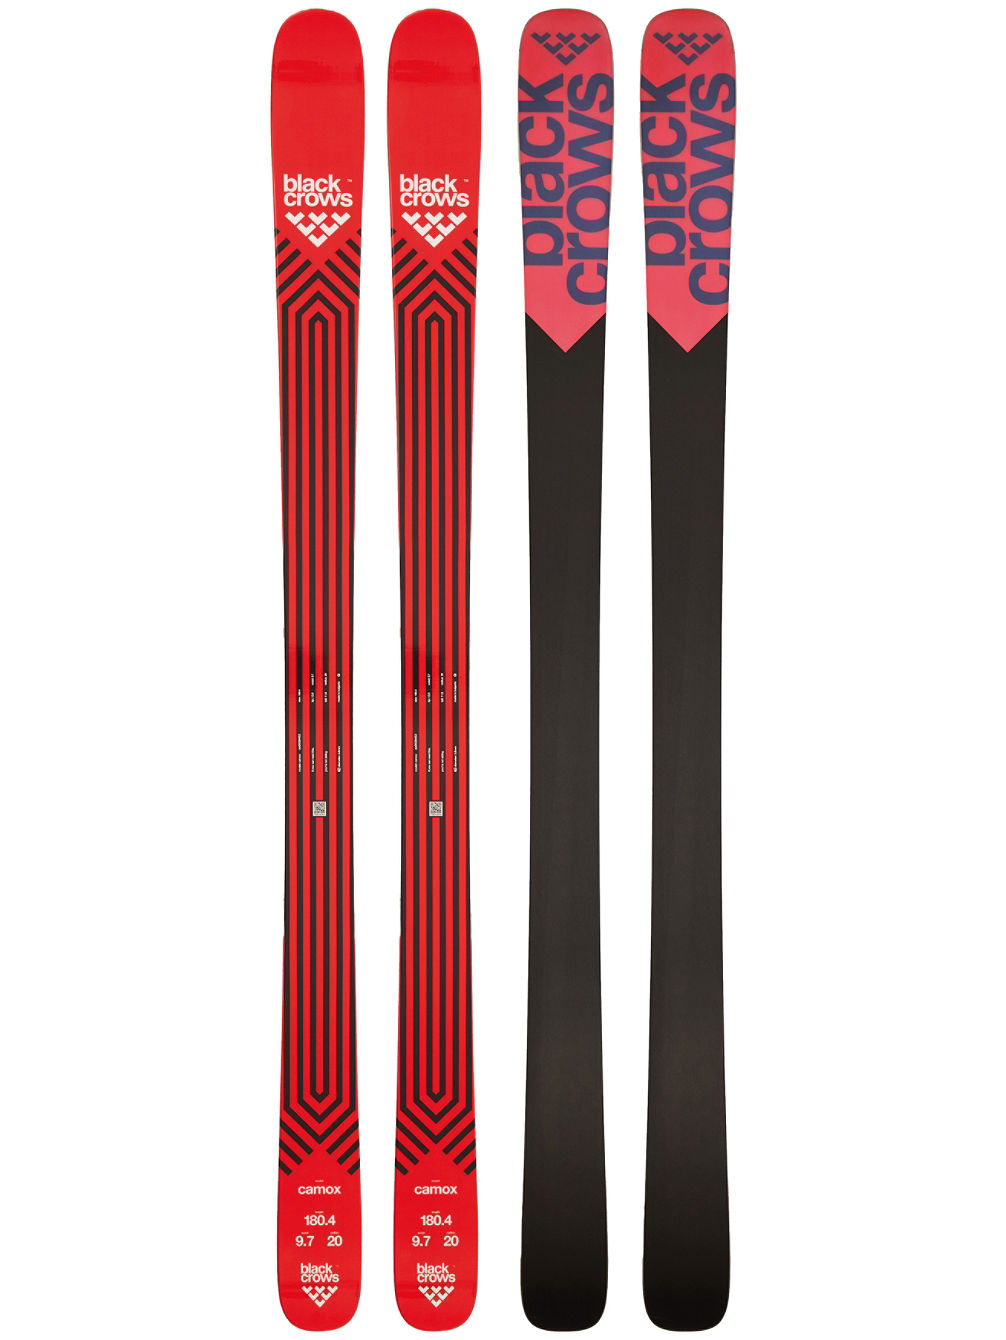 Camox 97mm 180 Skis